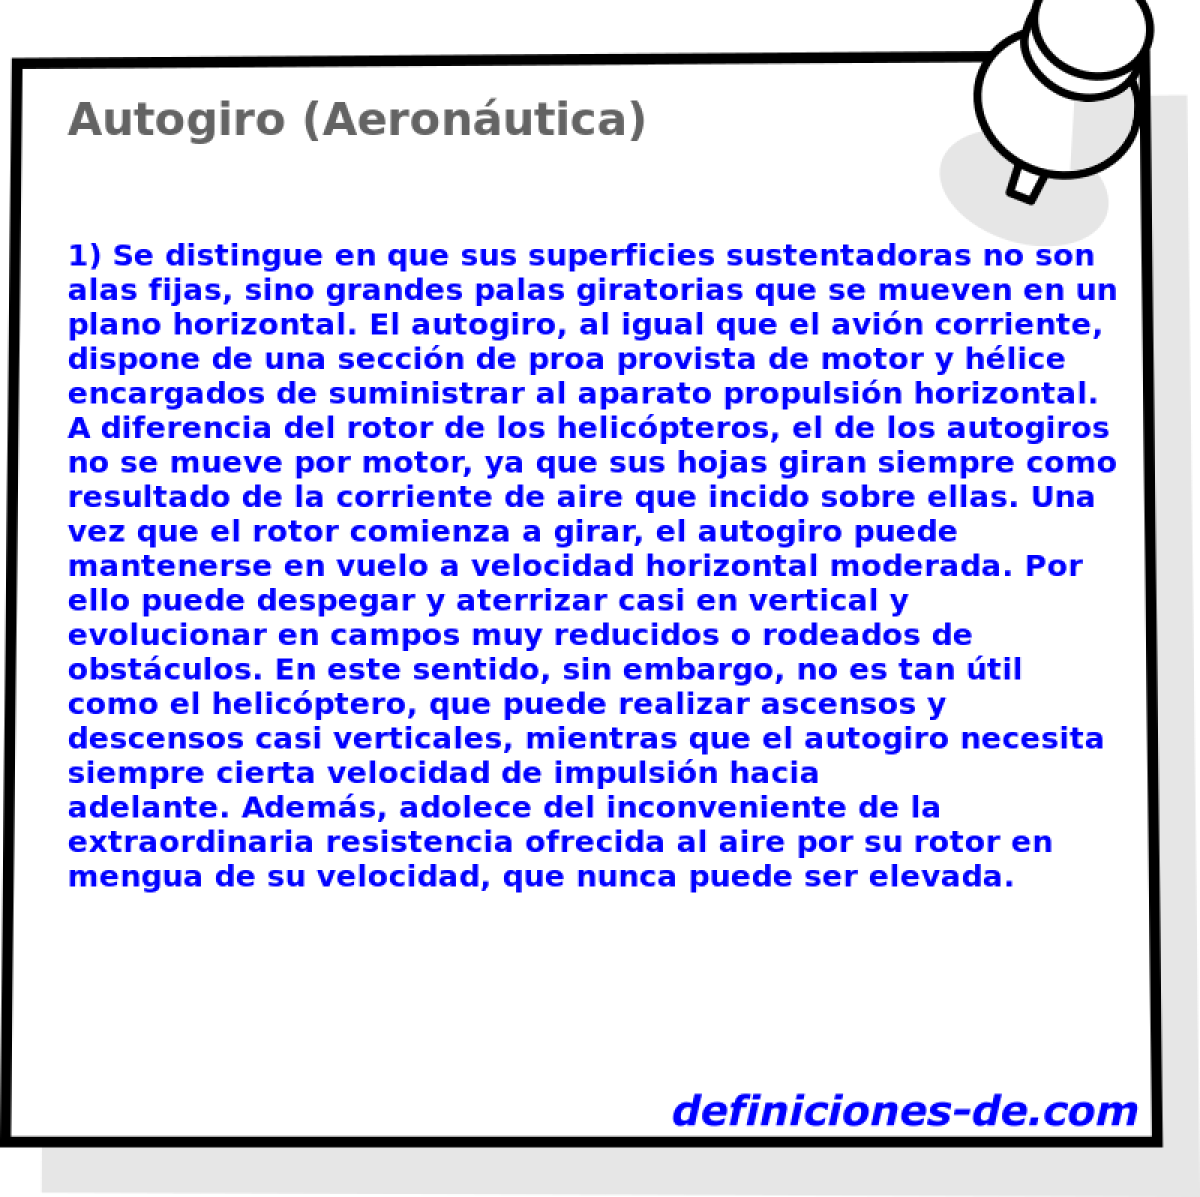 Autogiro (Aeronutica) 